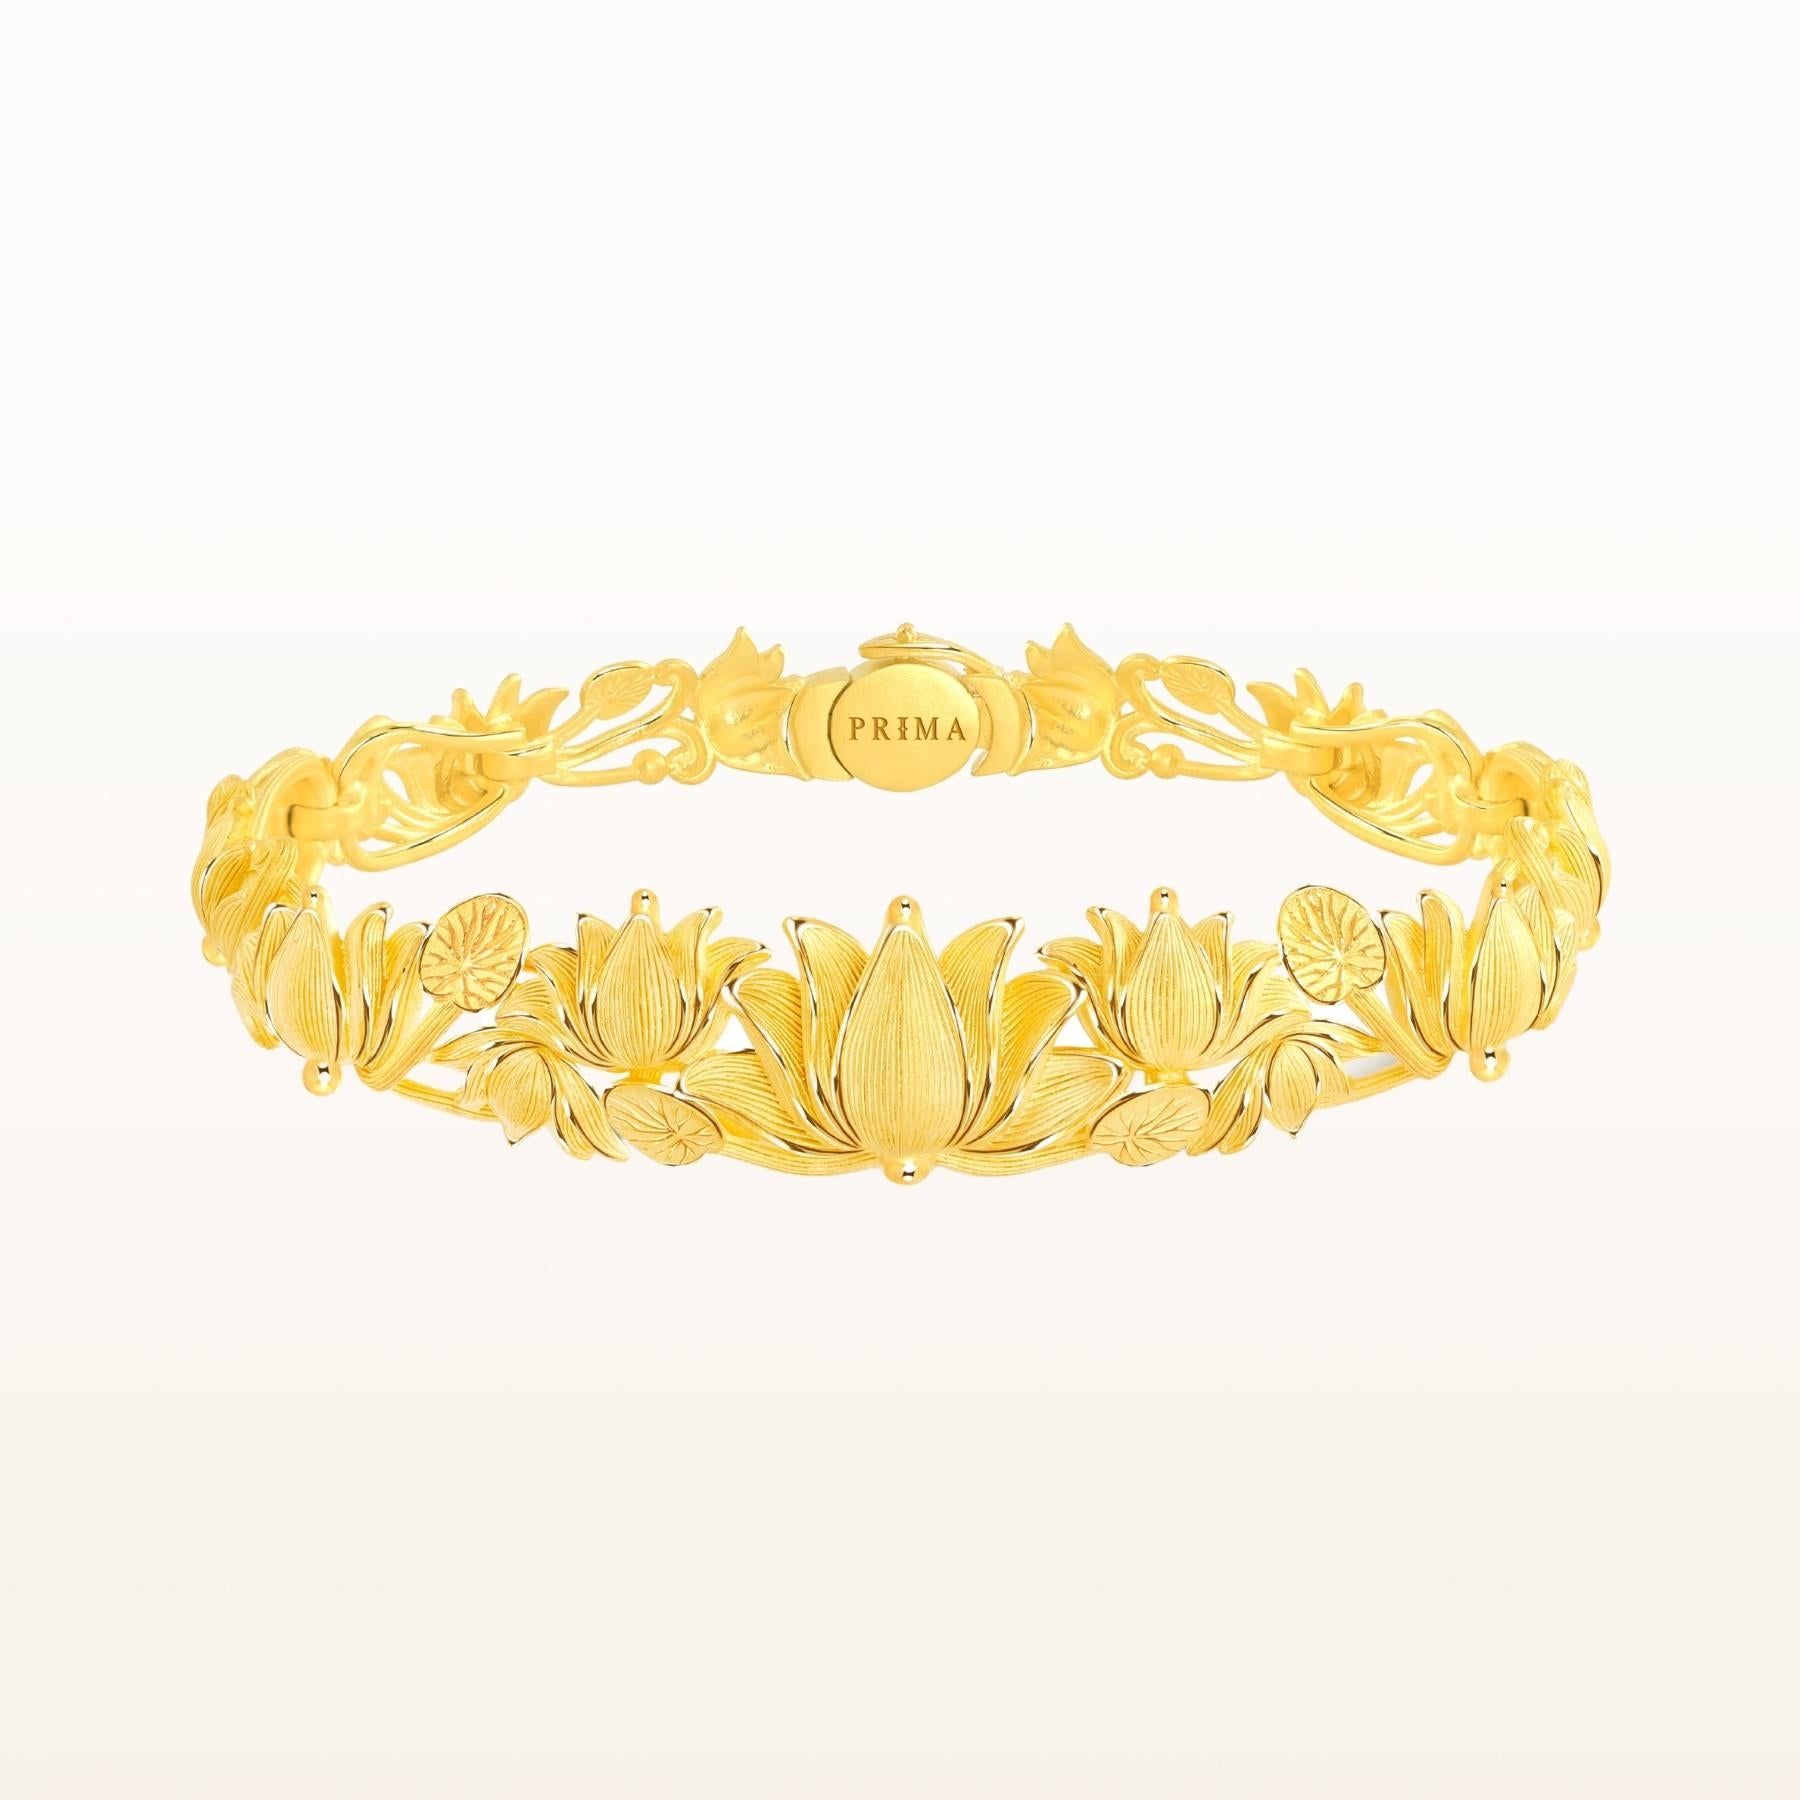 Lotus bracelet, cord bracelet with silver lotus charm, buddhist symbol,  bright yellow cord, zen, flower, yoga bracelet, spiritual jewelry – Shani &  Adi Jewelry